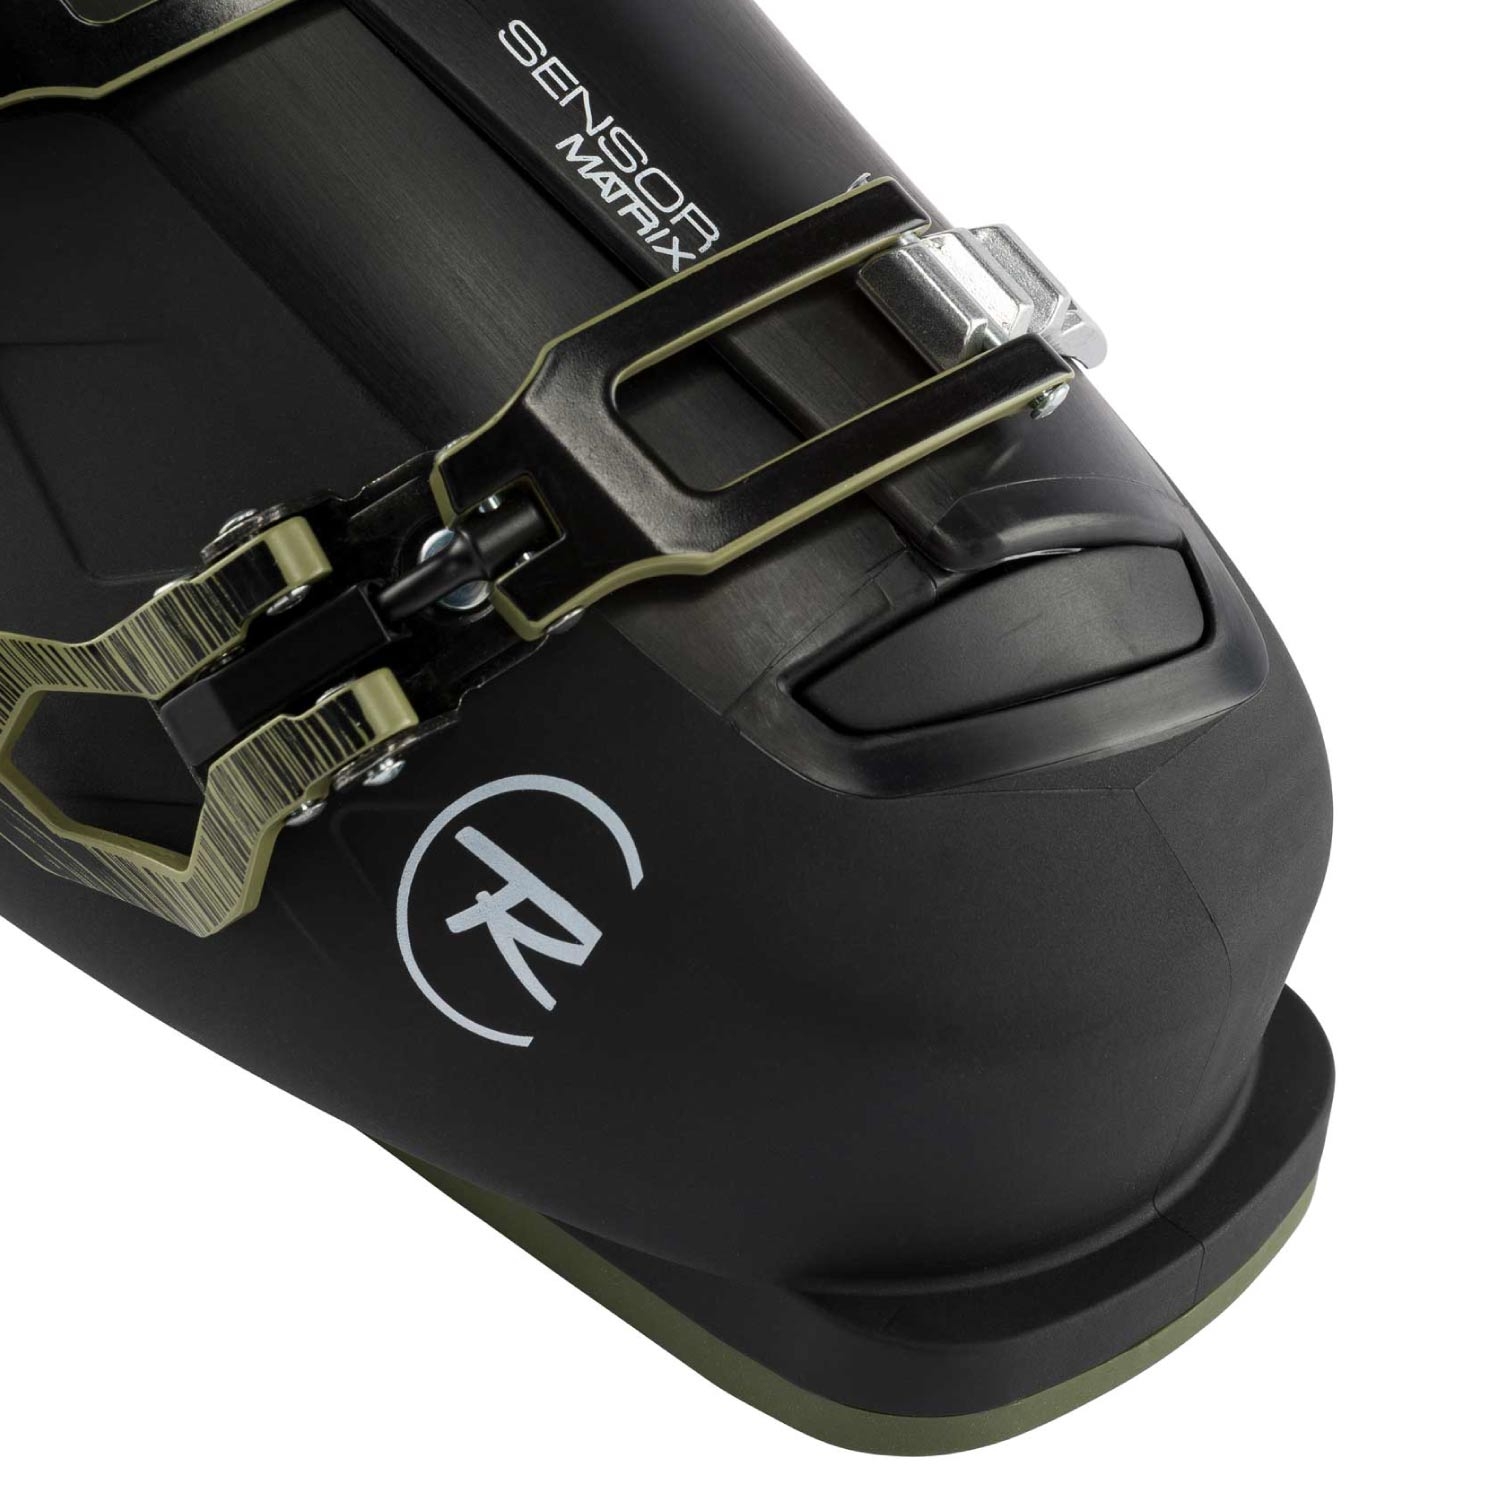 Rossignol Track 110 Ski Boots Black Khaki 2021